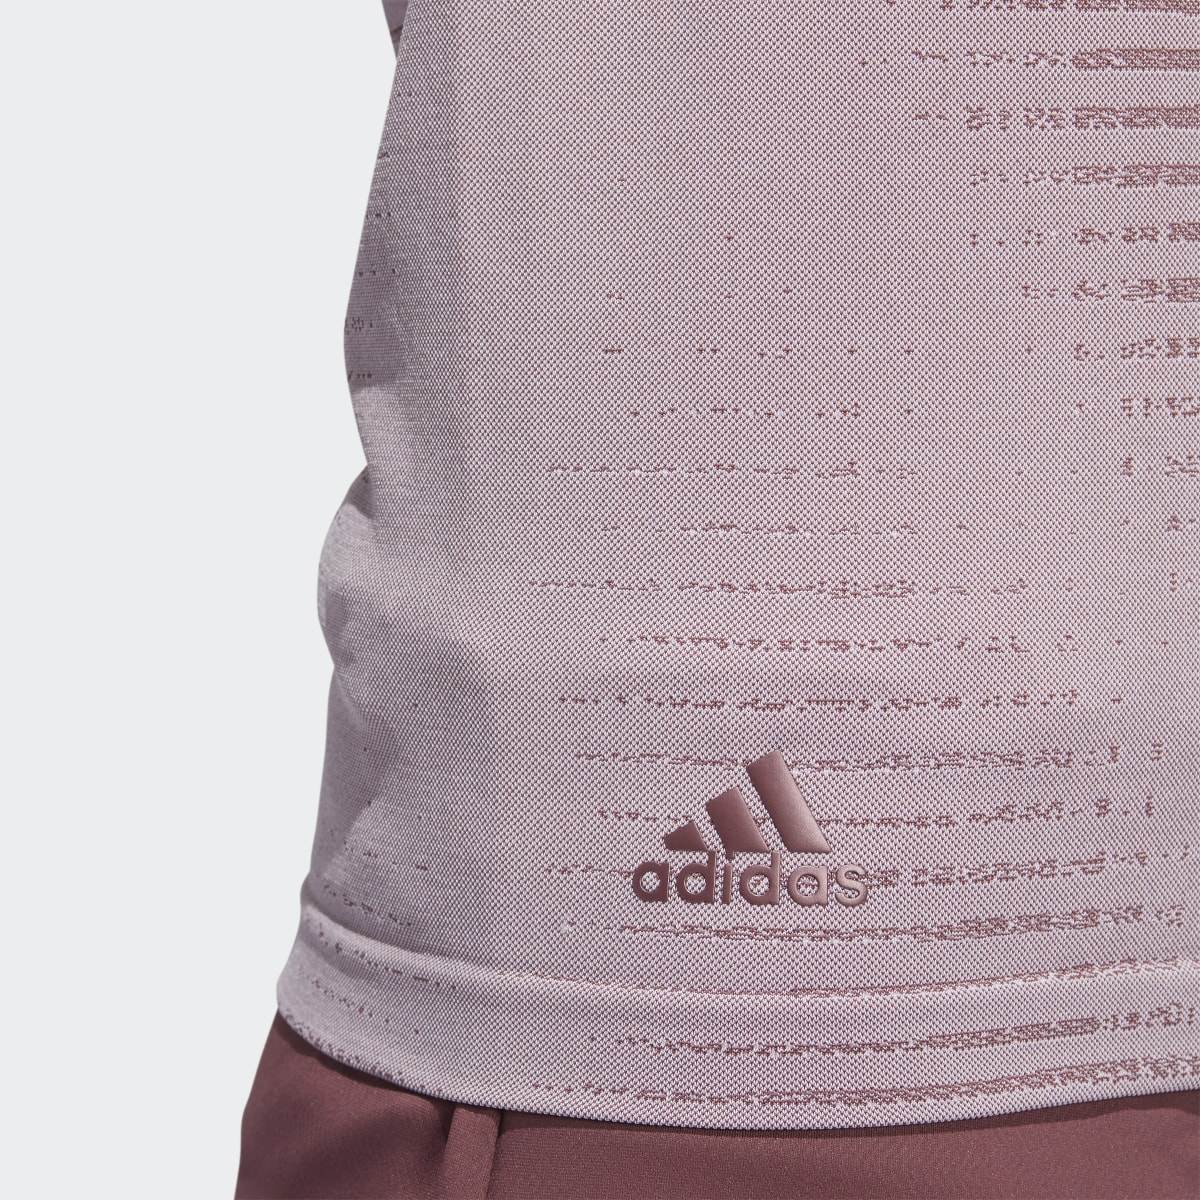 Adidas Primeknit Sleeveless Polo Shirt. 7